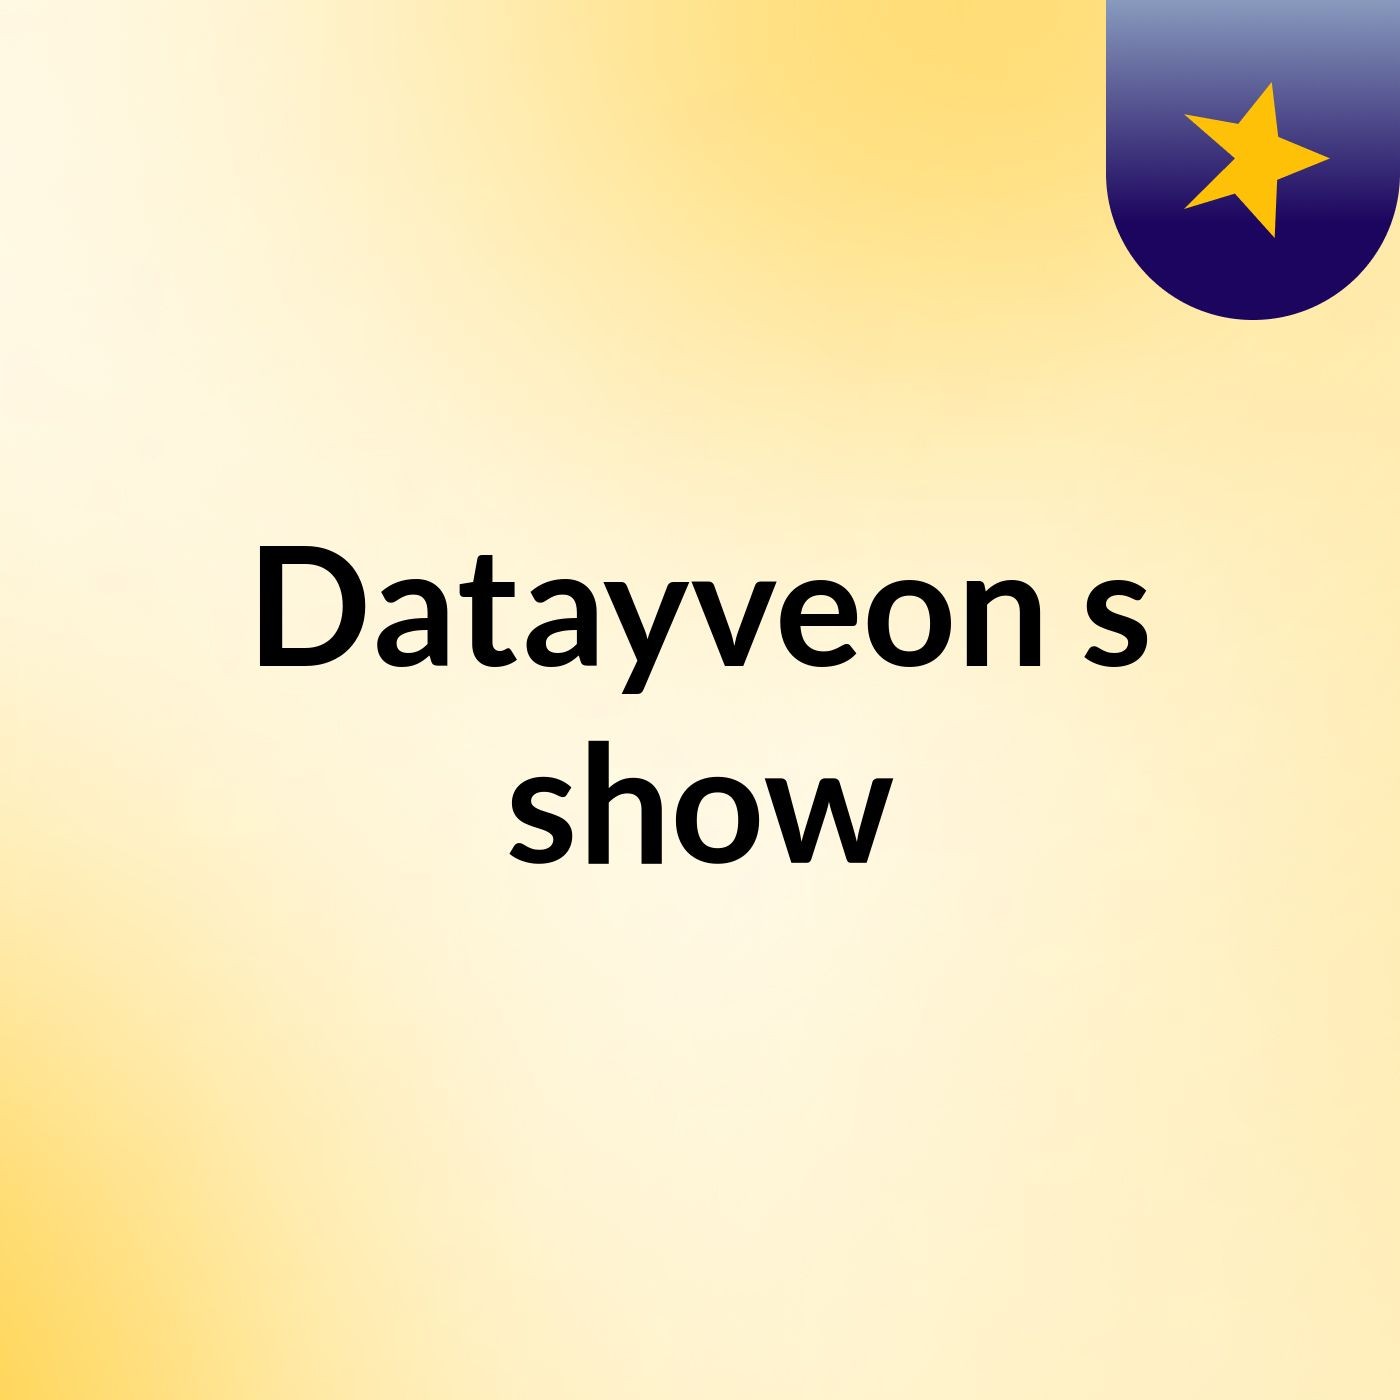 Datayveon's show